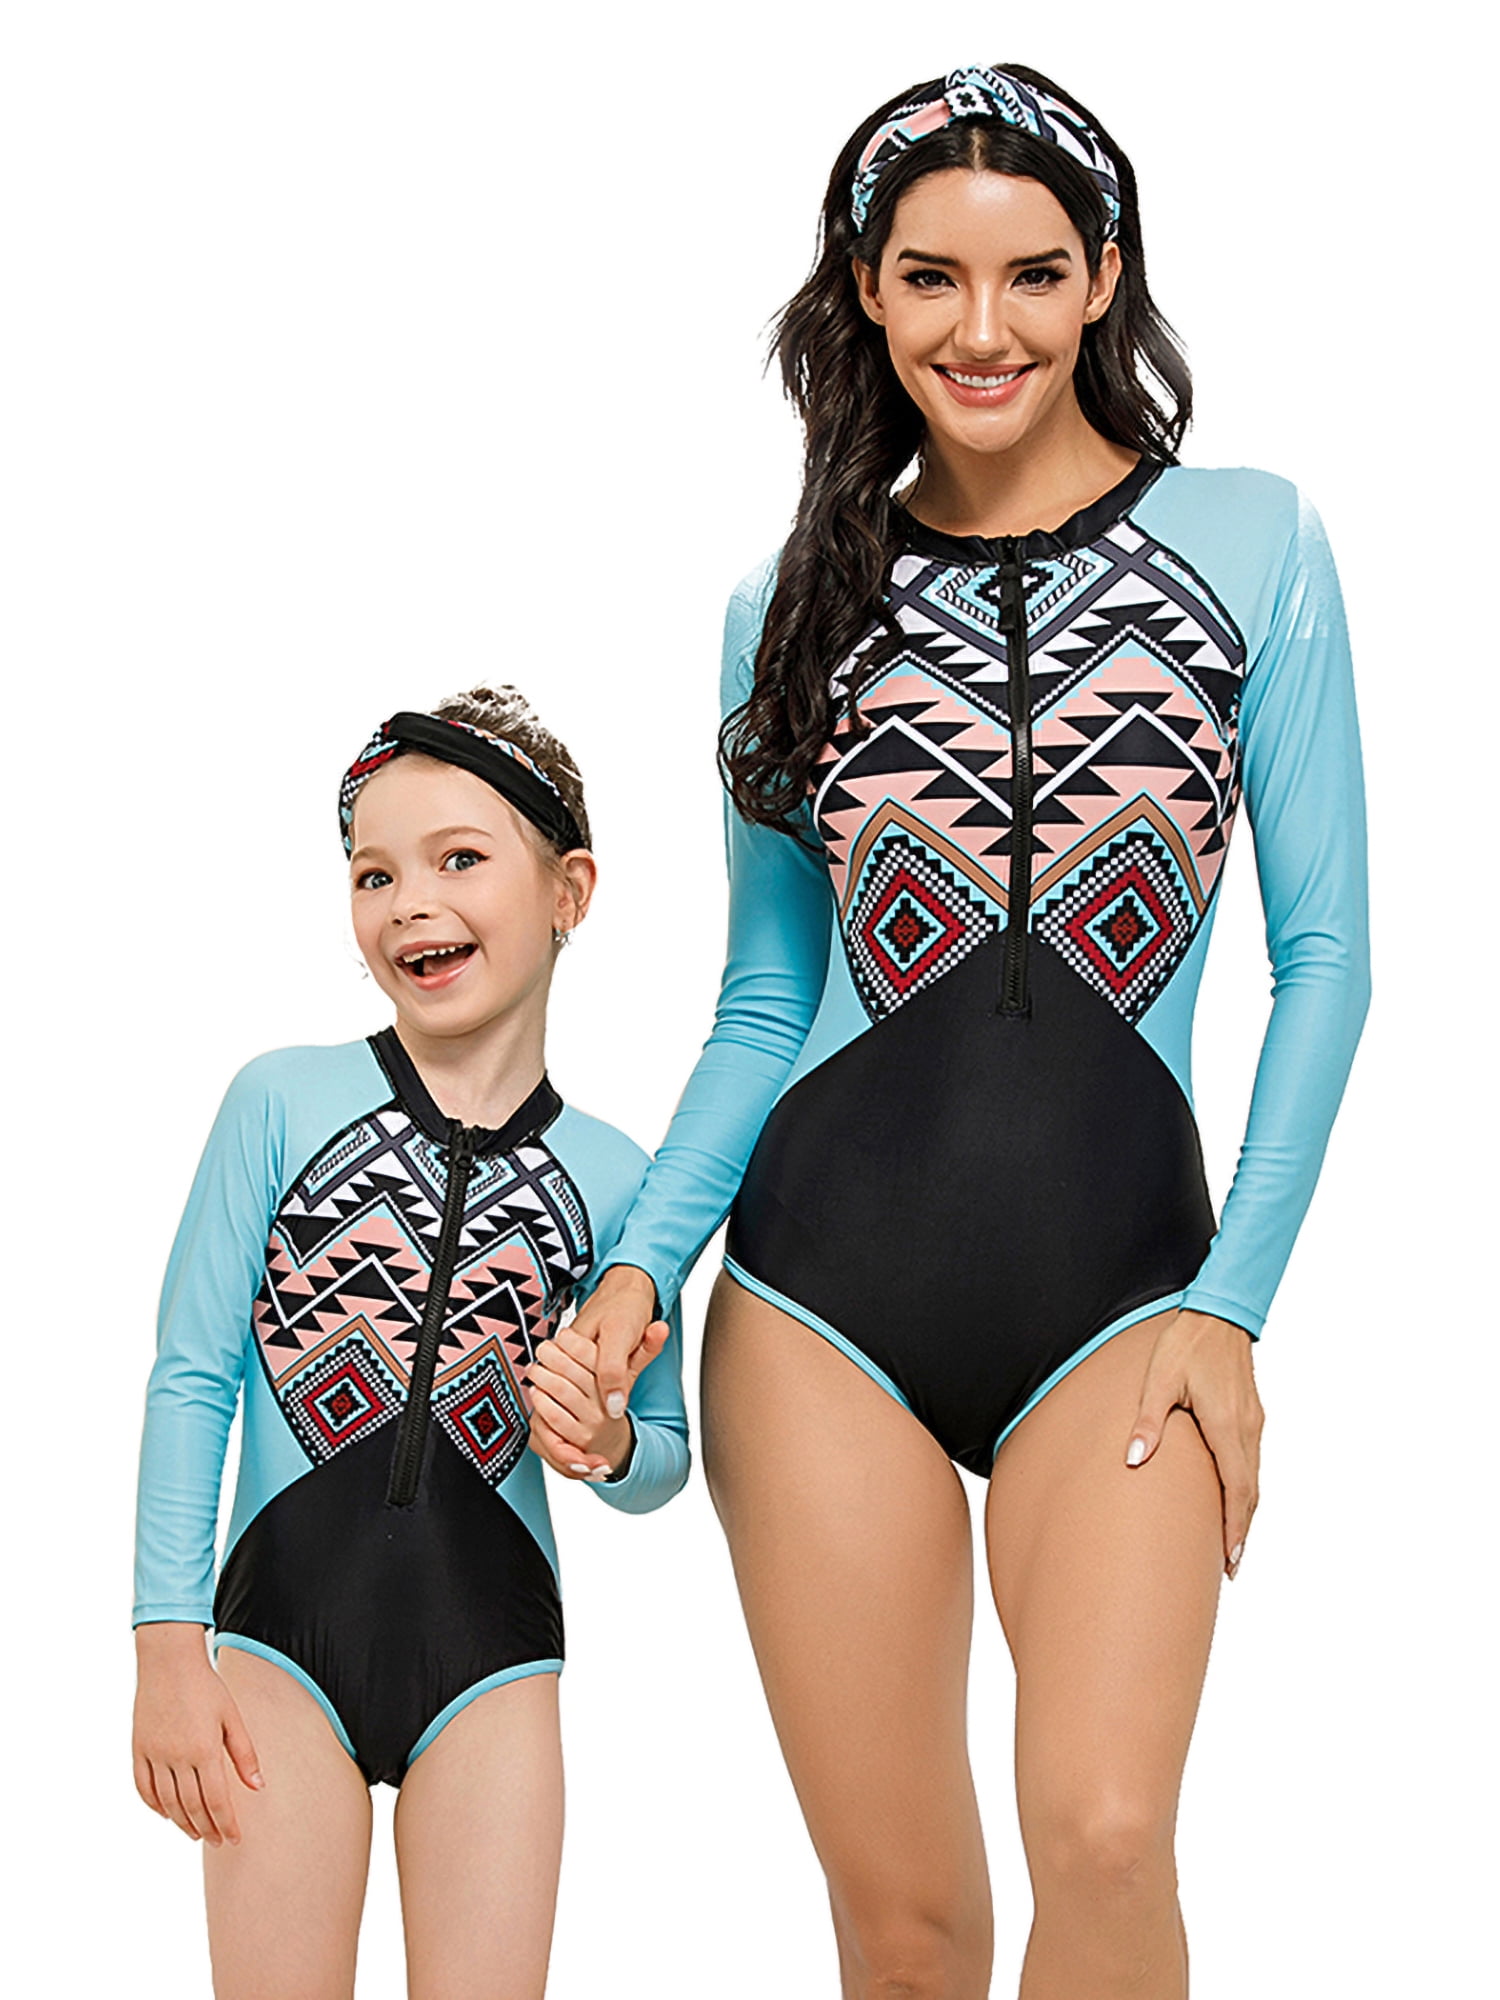 Toddlers Boys Girls Long Sleeves Rash Guard Swimsuit Swimwear Beachwear Costumes 